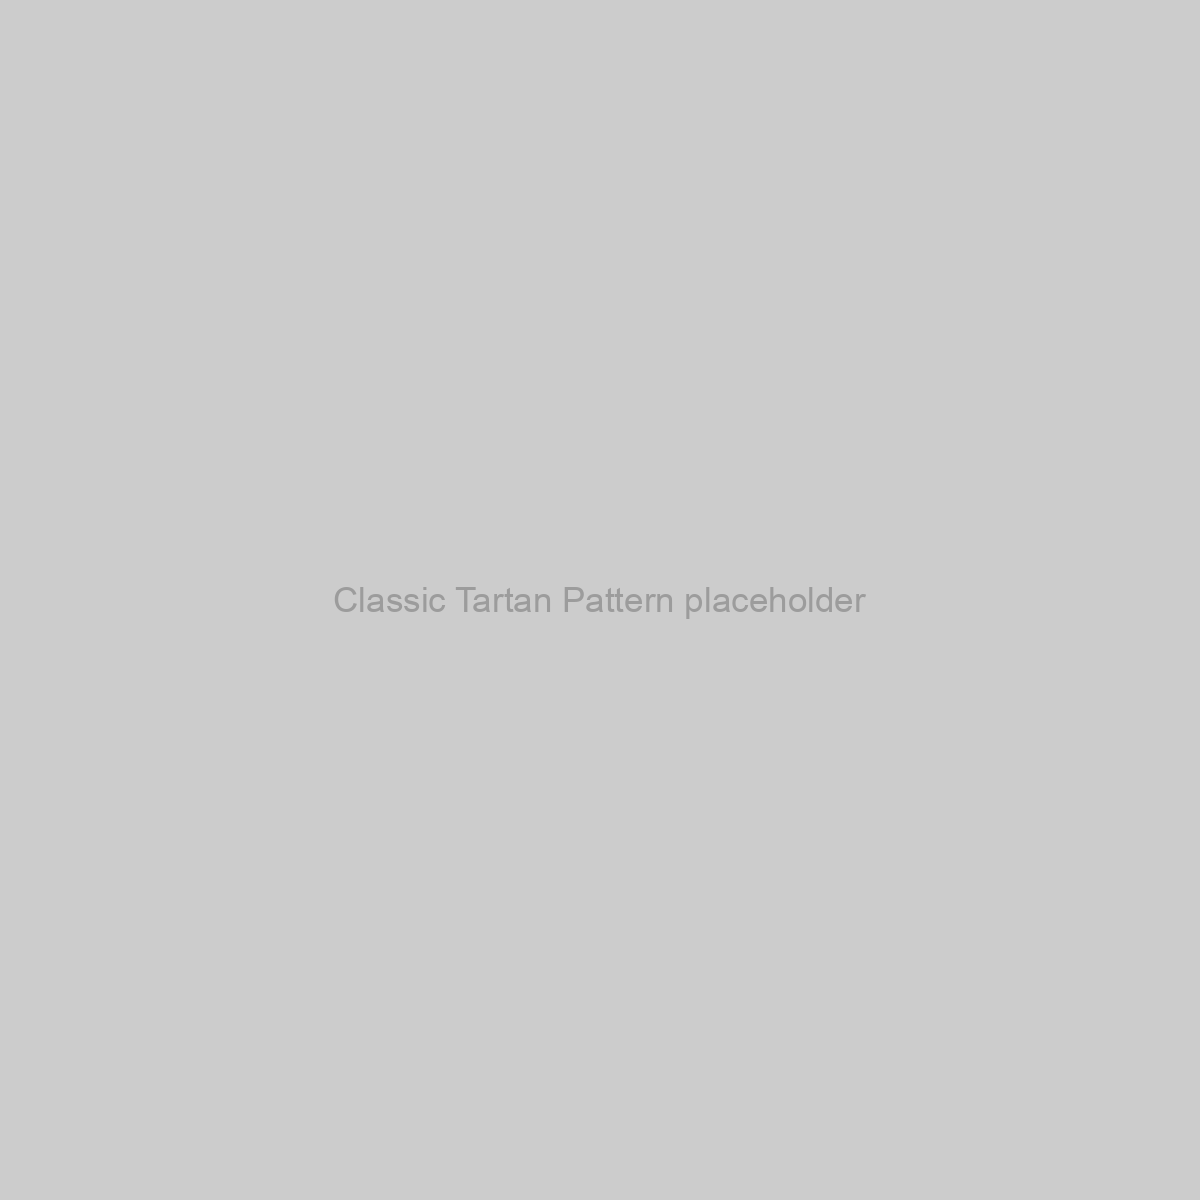 Classic Tartan Pattern Placeholder Image